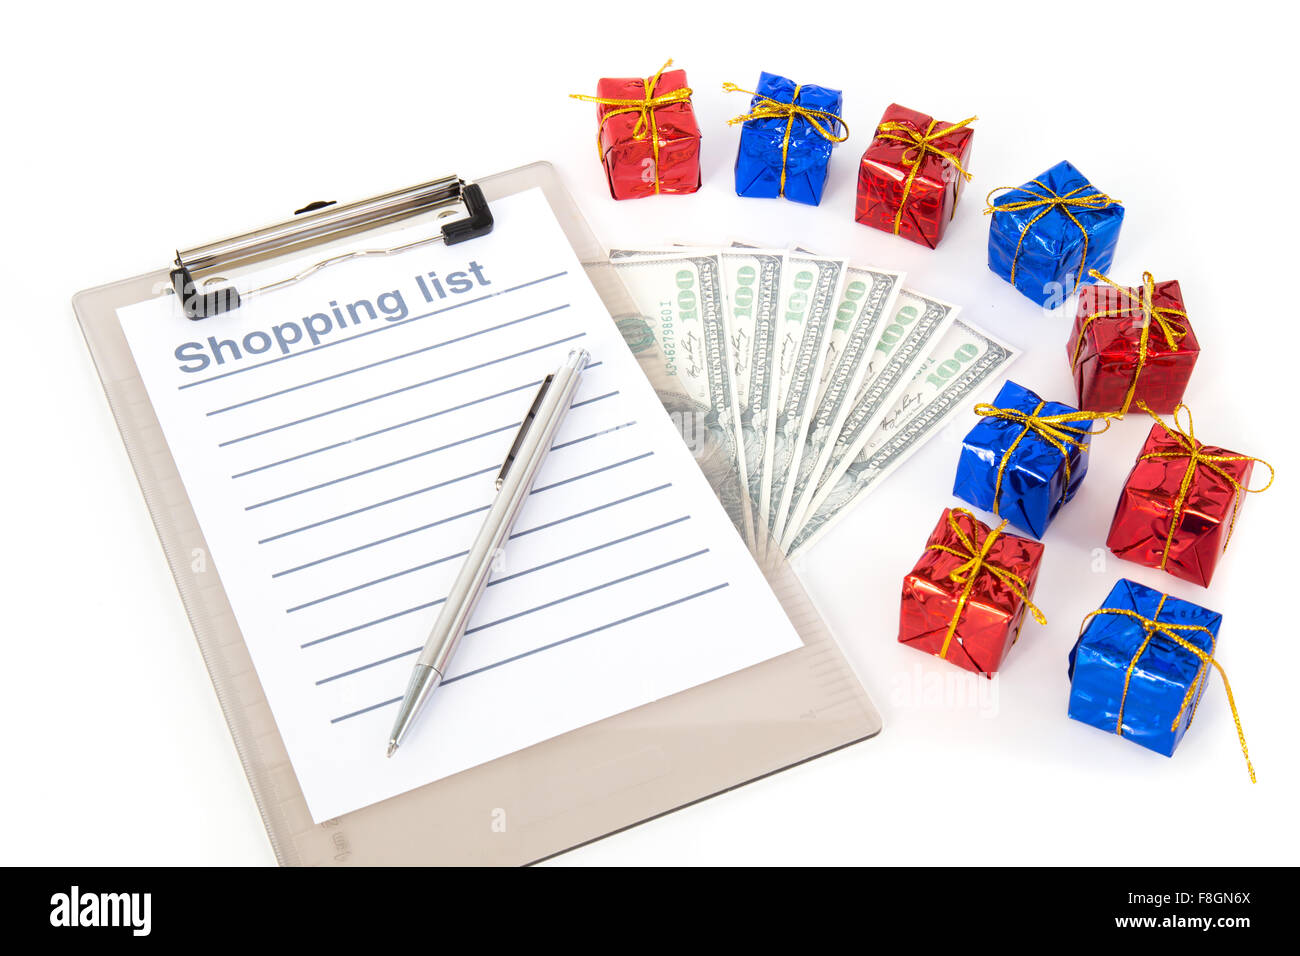 Christmas shopping list with dollar bills Stock Photo